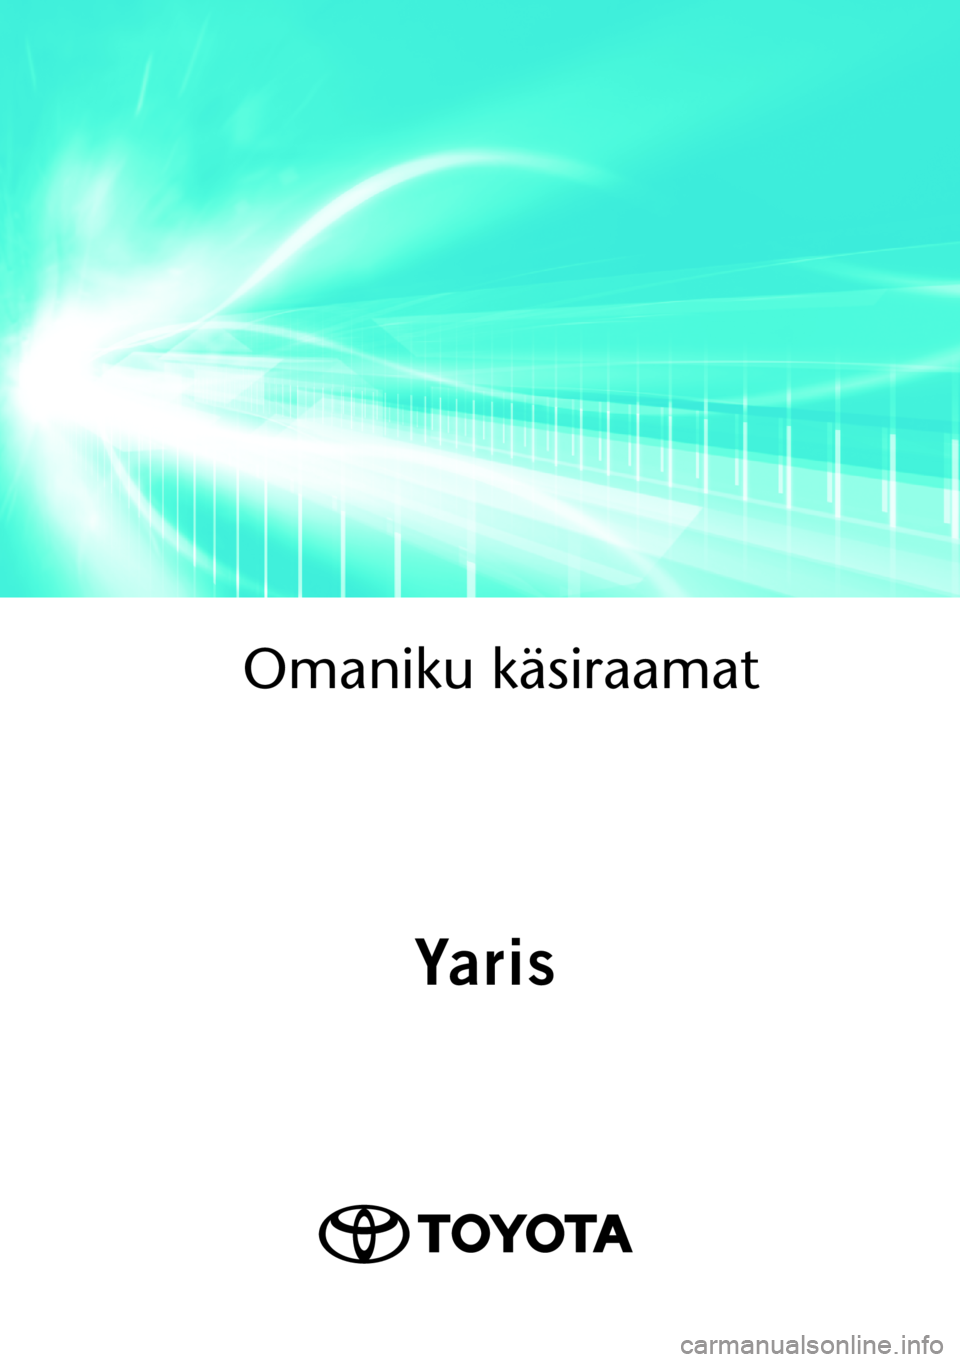 TOYOTA YARIS 2021  Kasutusjuhend (in Estonian)  
Omaniku käsiraamat\
OMK0001EE
As of 07.2020 production vehicles
Yaris
Yaris 